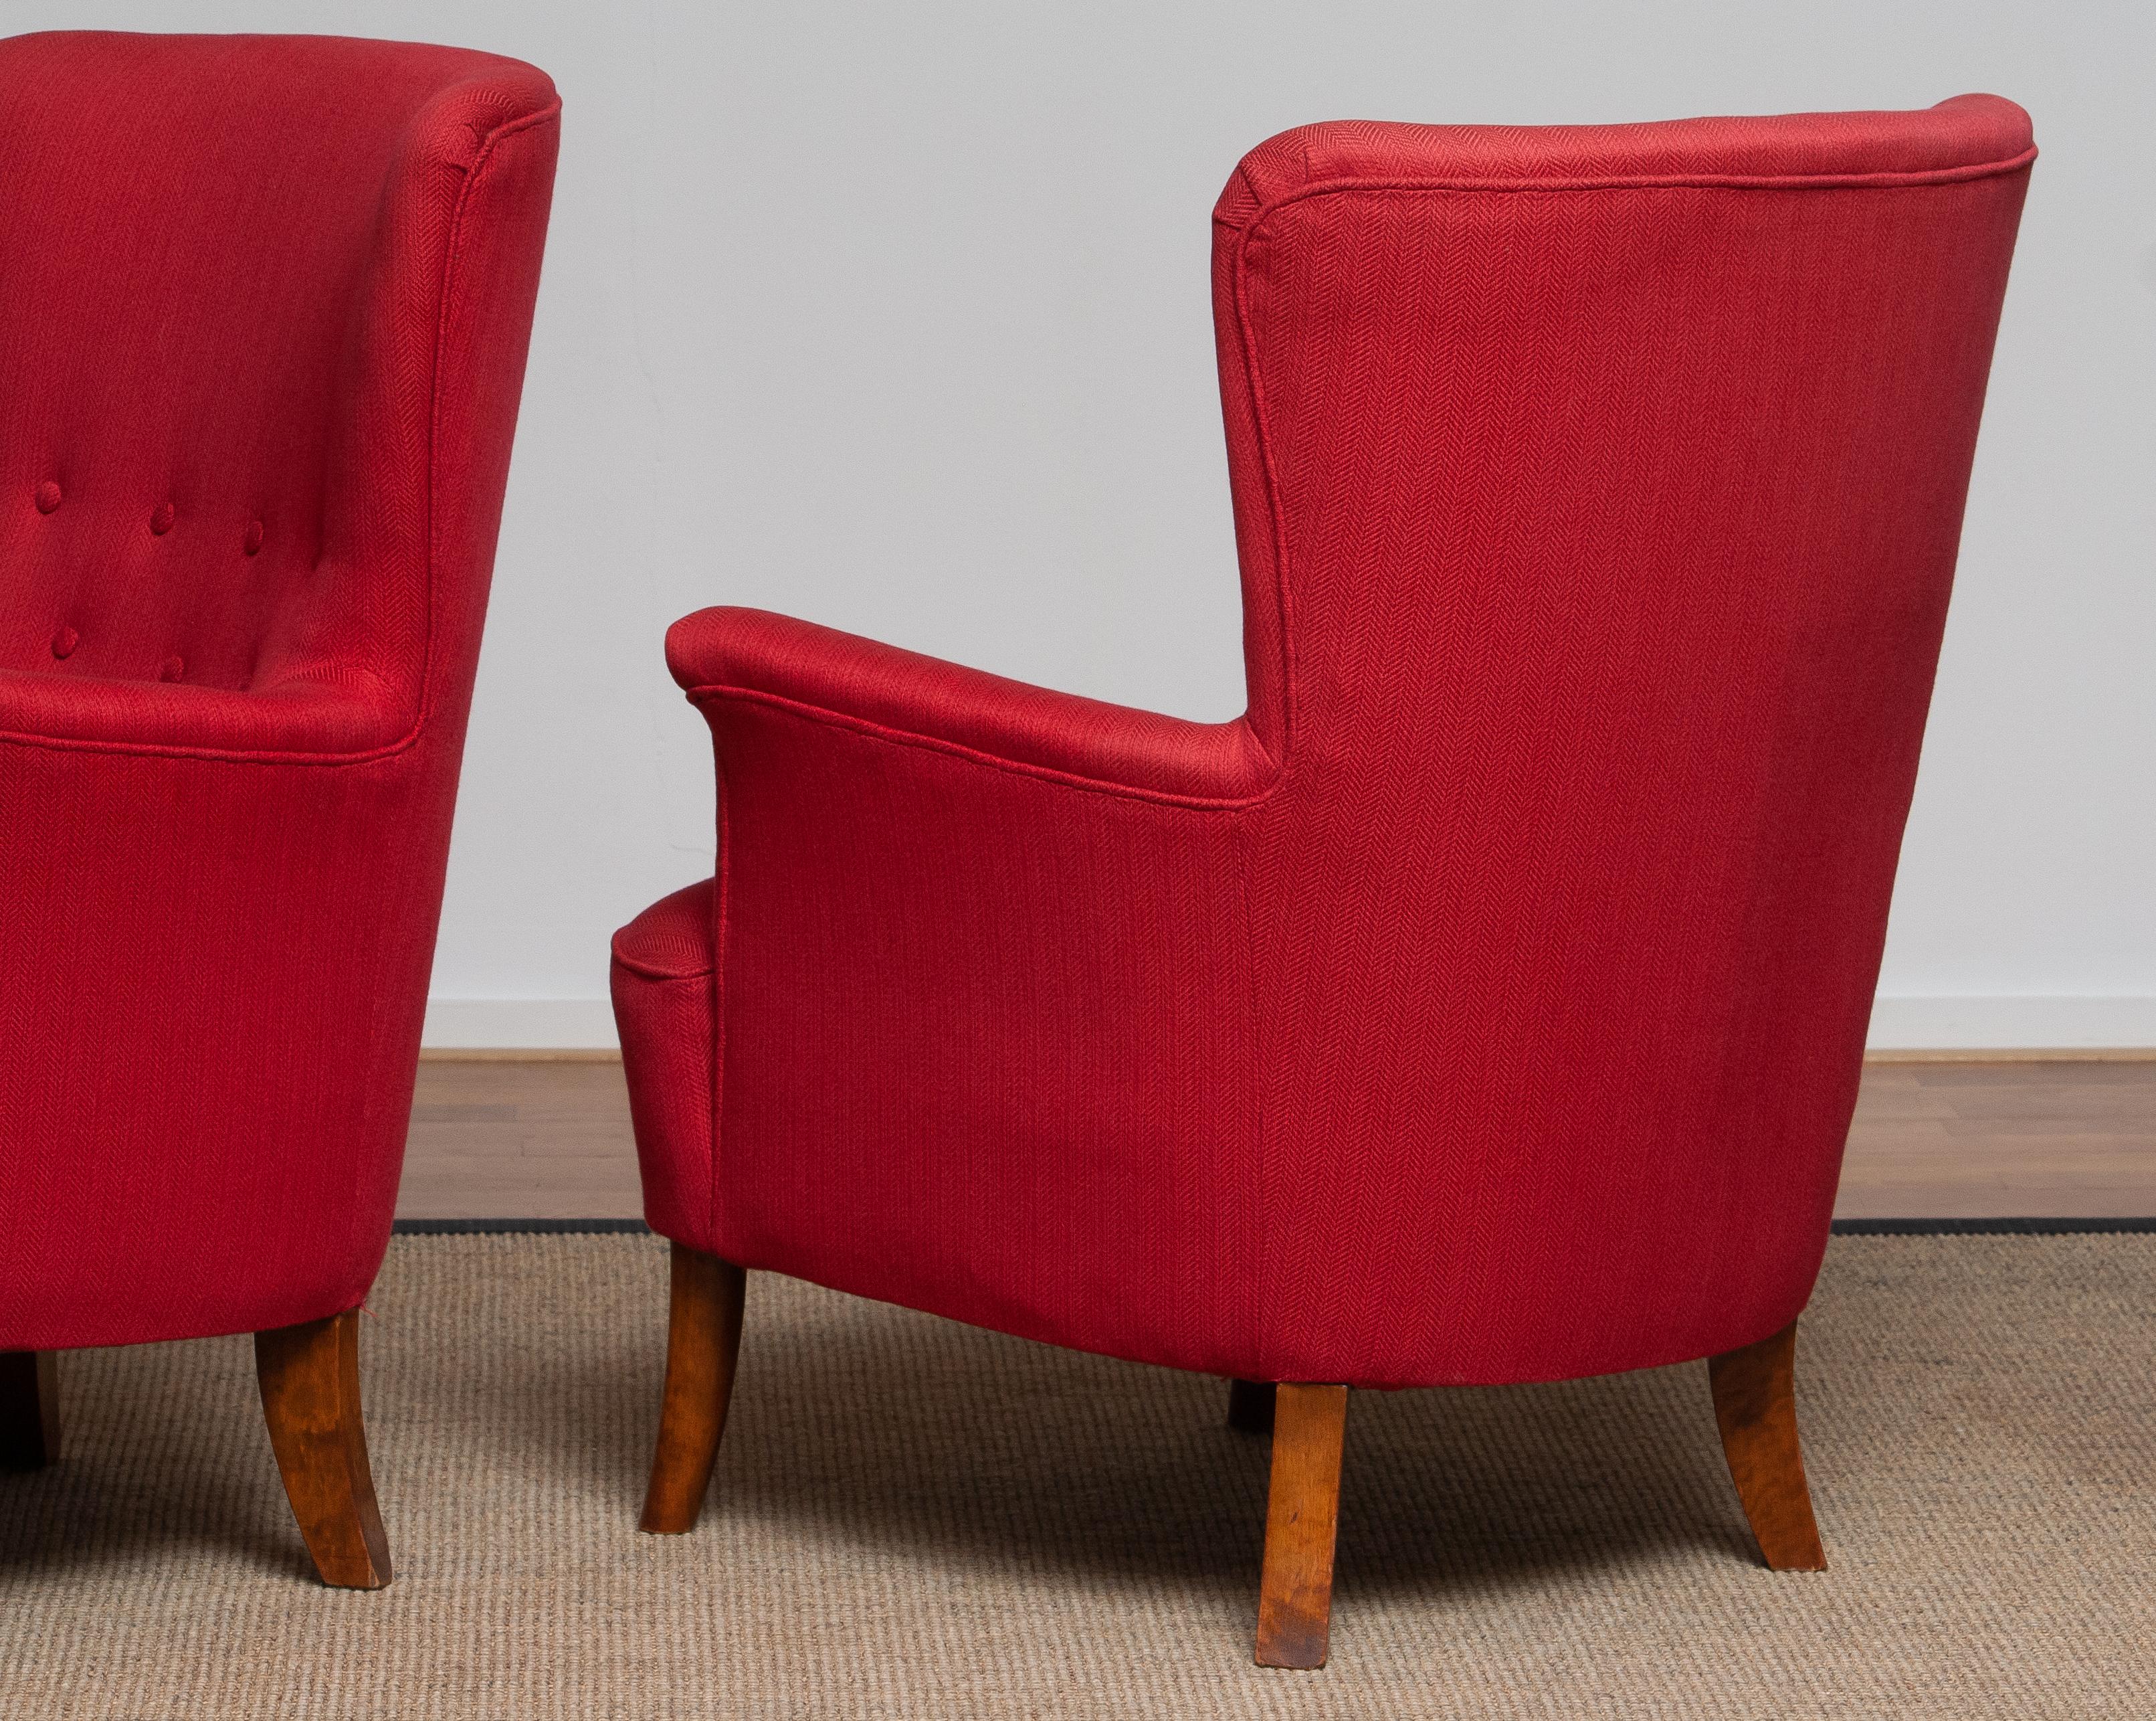 1940s, Pair of Fuchsia Easy or Lounge Chair by Carl Malmsten for Oh Sj�ögren 1